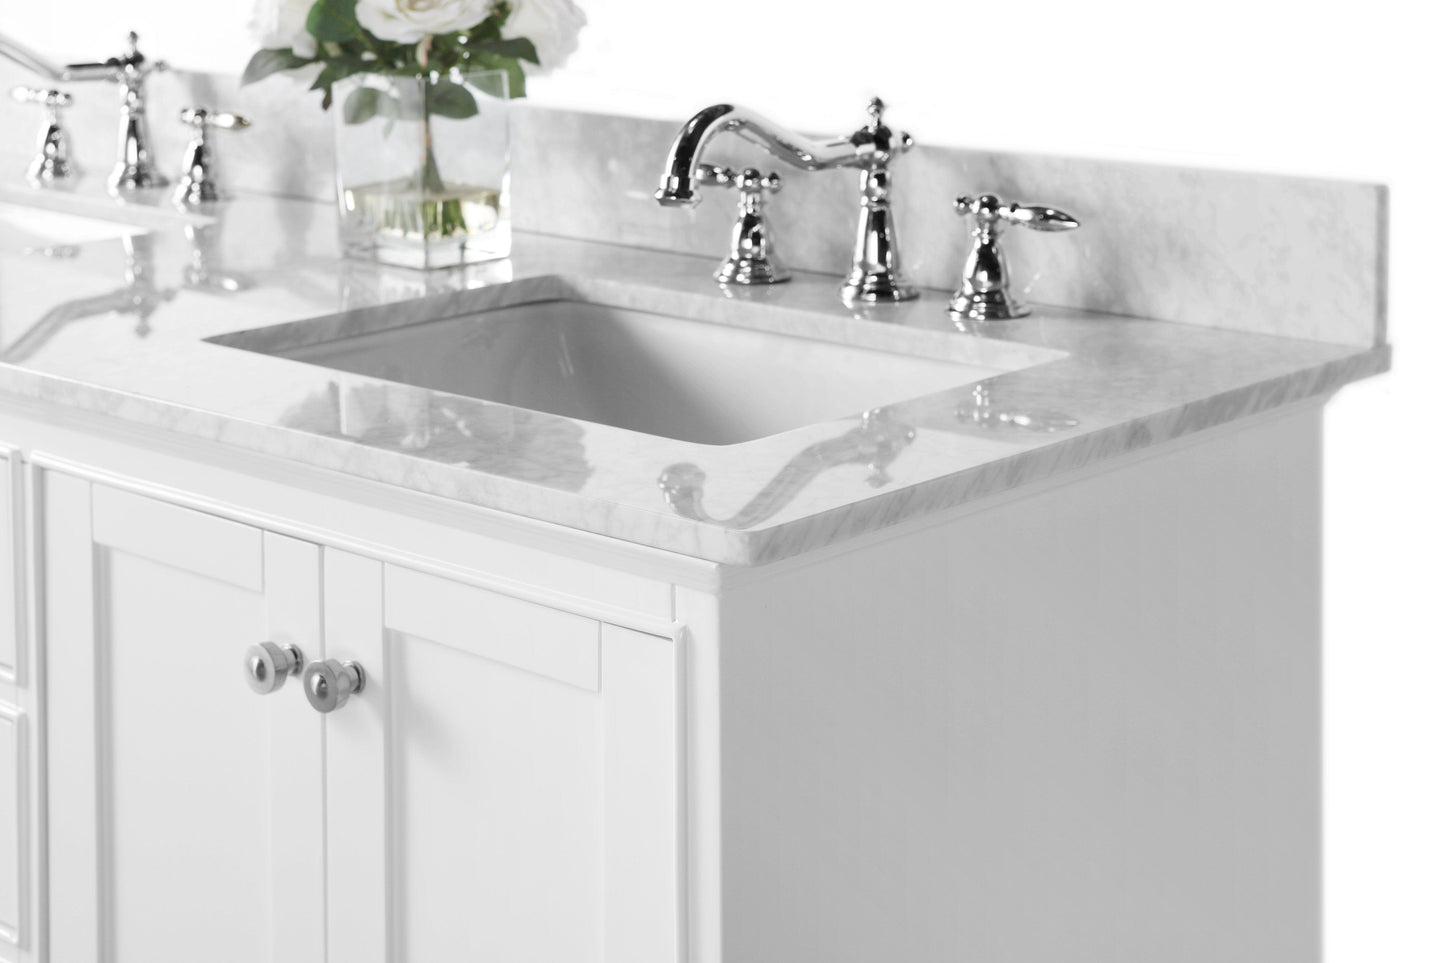 Ancerra Designs Audrey 60 in. Bath Vanity Set in White with 24 in. Mirror